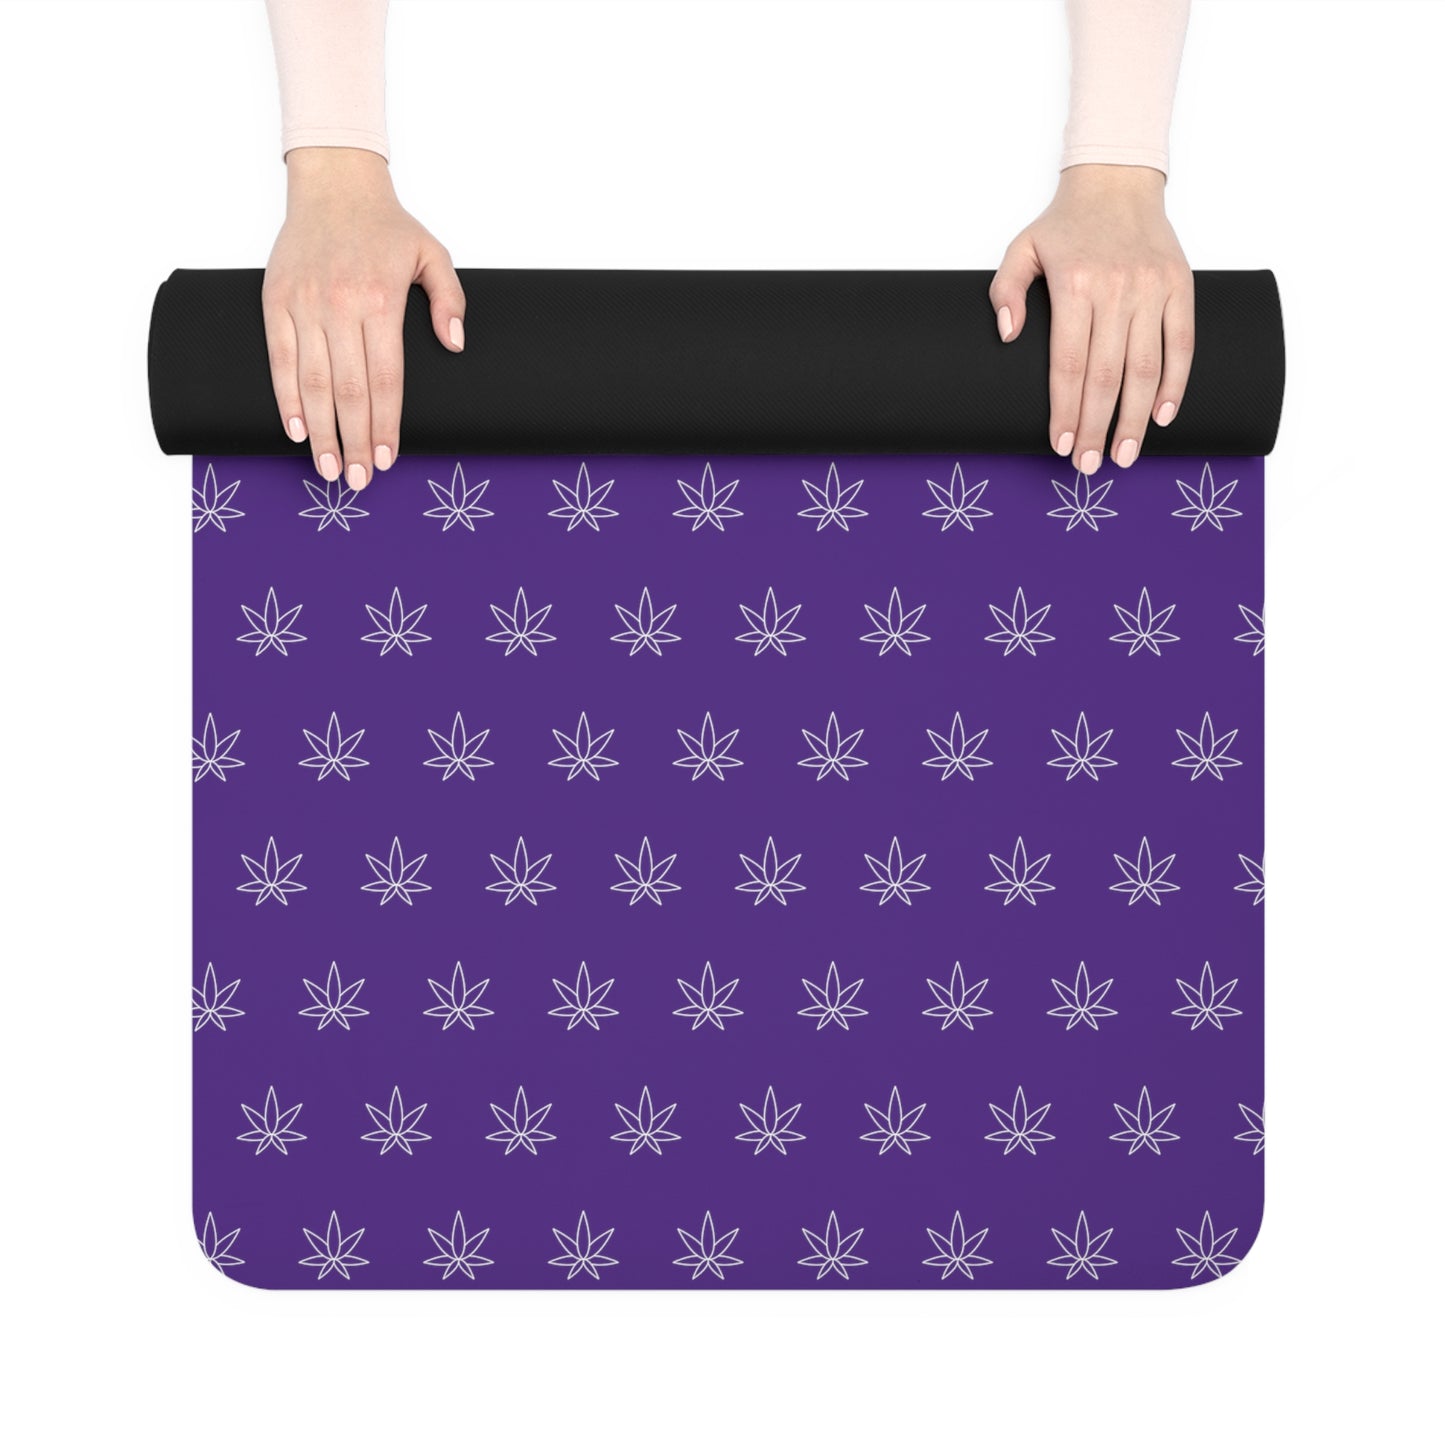 Make It Happen Cannabis Rubber Yoga Mat